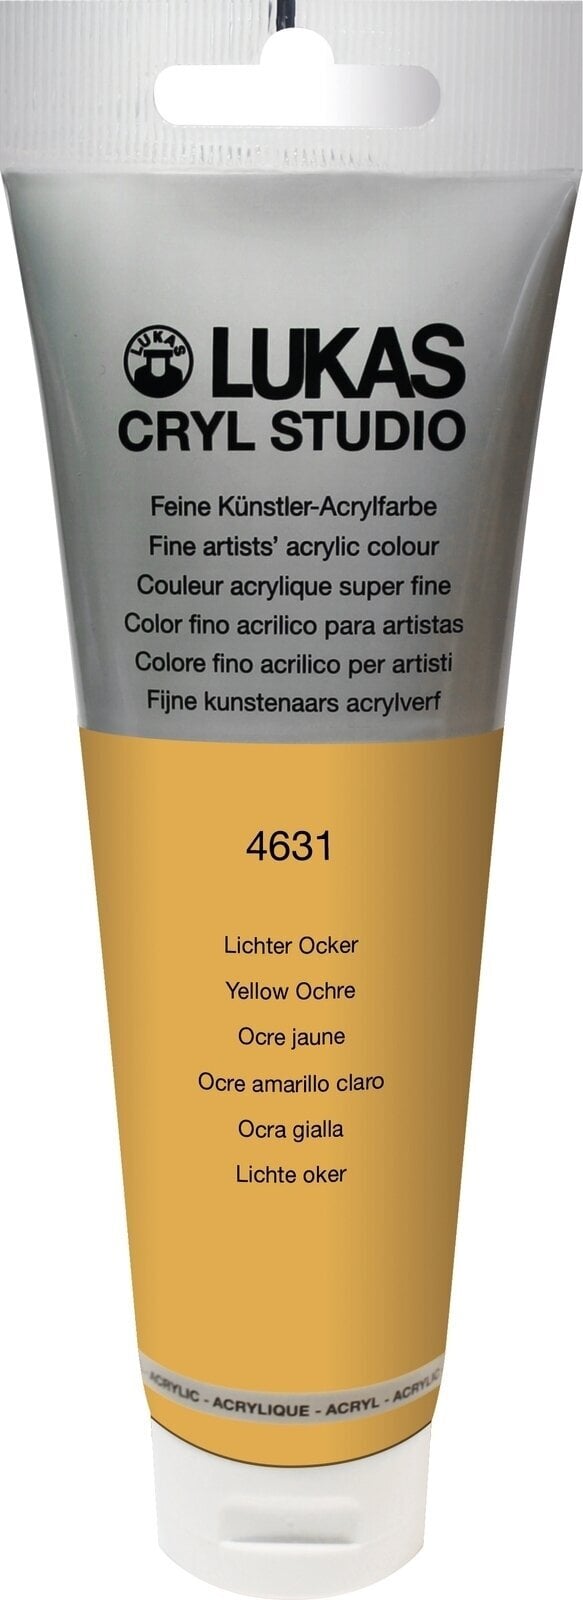 Akrylová farba Lukas Cryl Studio Acrylic Paint Plastic Tube Akrylová farba Yellow Ochre 125 ml 1 ks